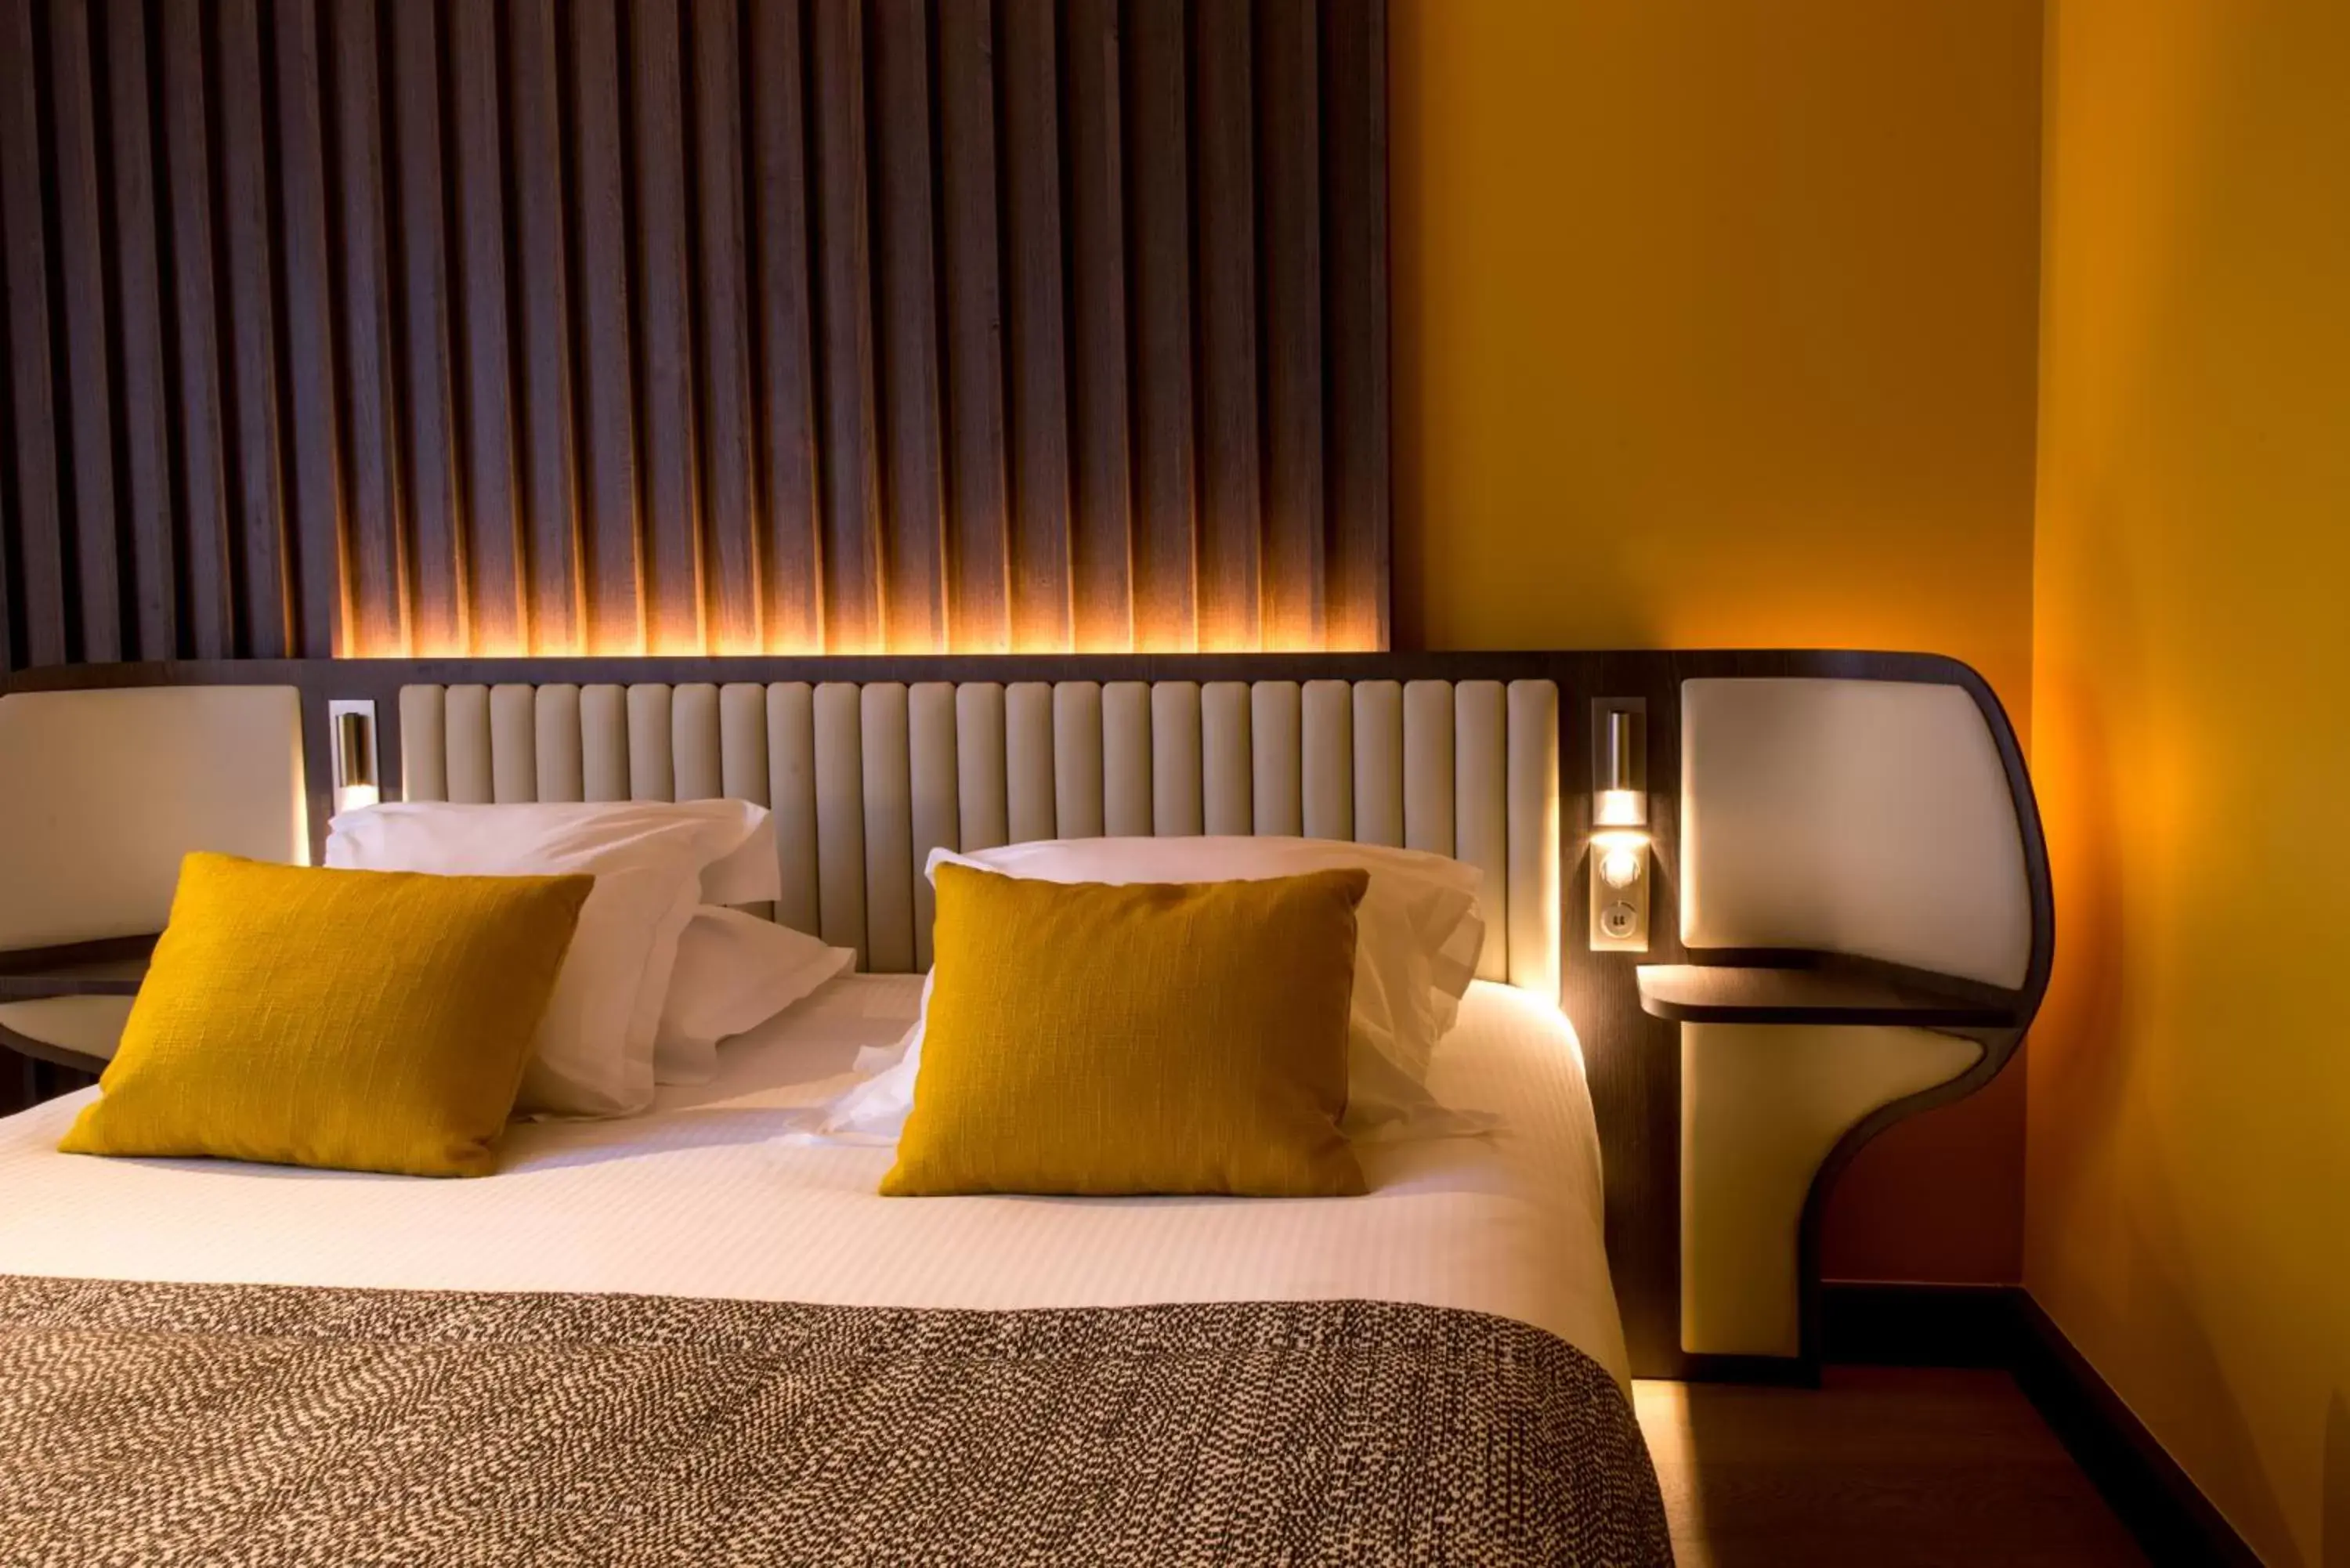 Photo of the whole room, Bed in Best Western Premier Hotel de la Paix